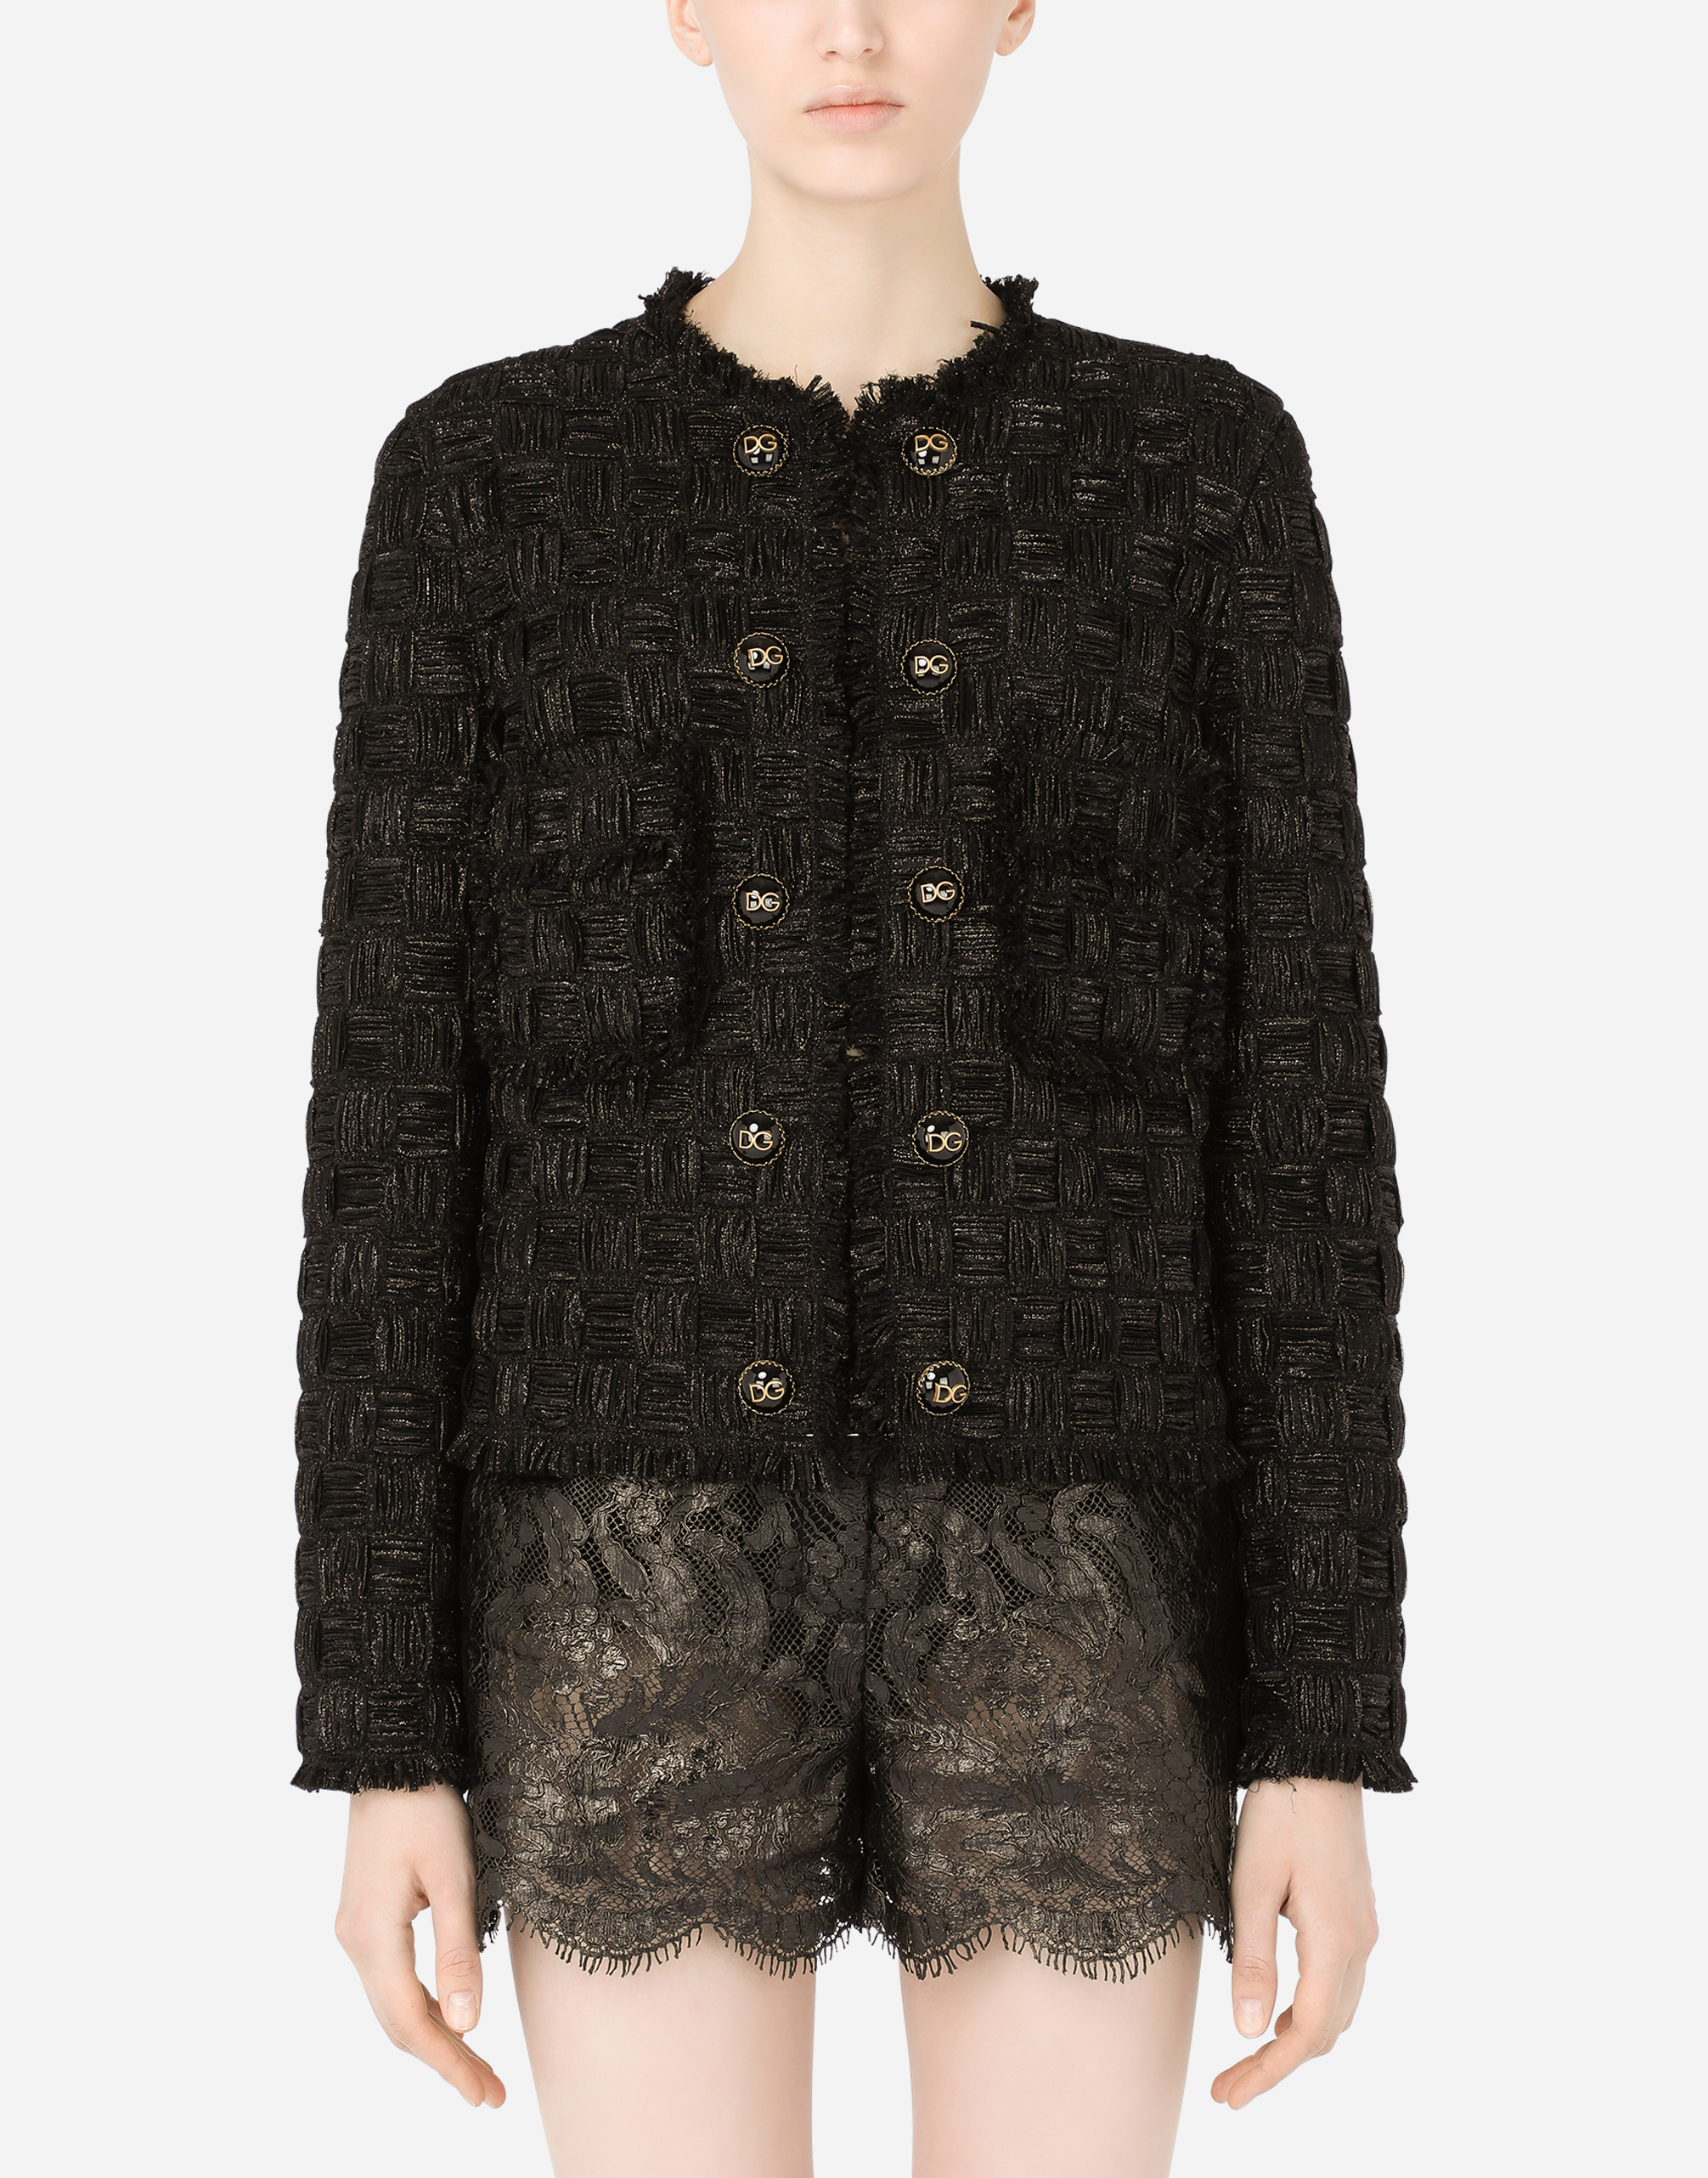 Lamé jacquard Gabbana jacket with cabochon DG buttons in Black